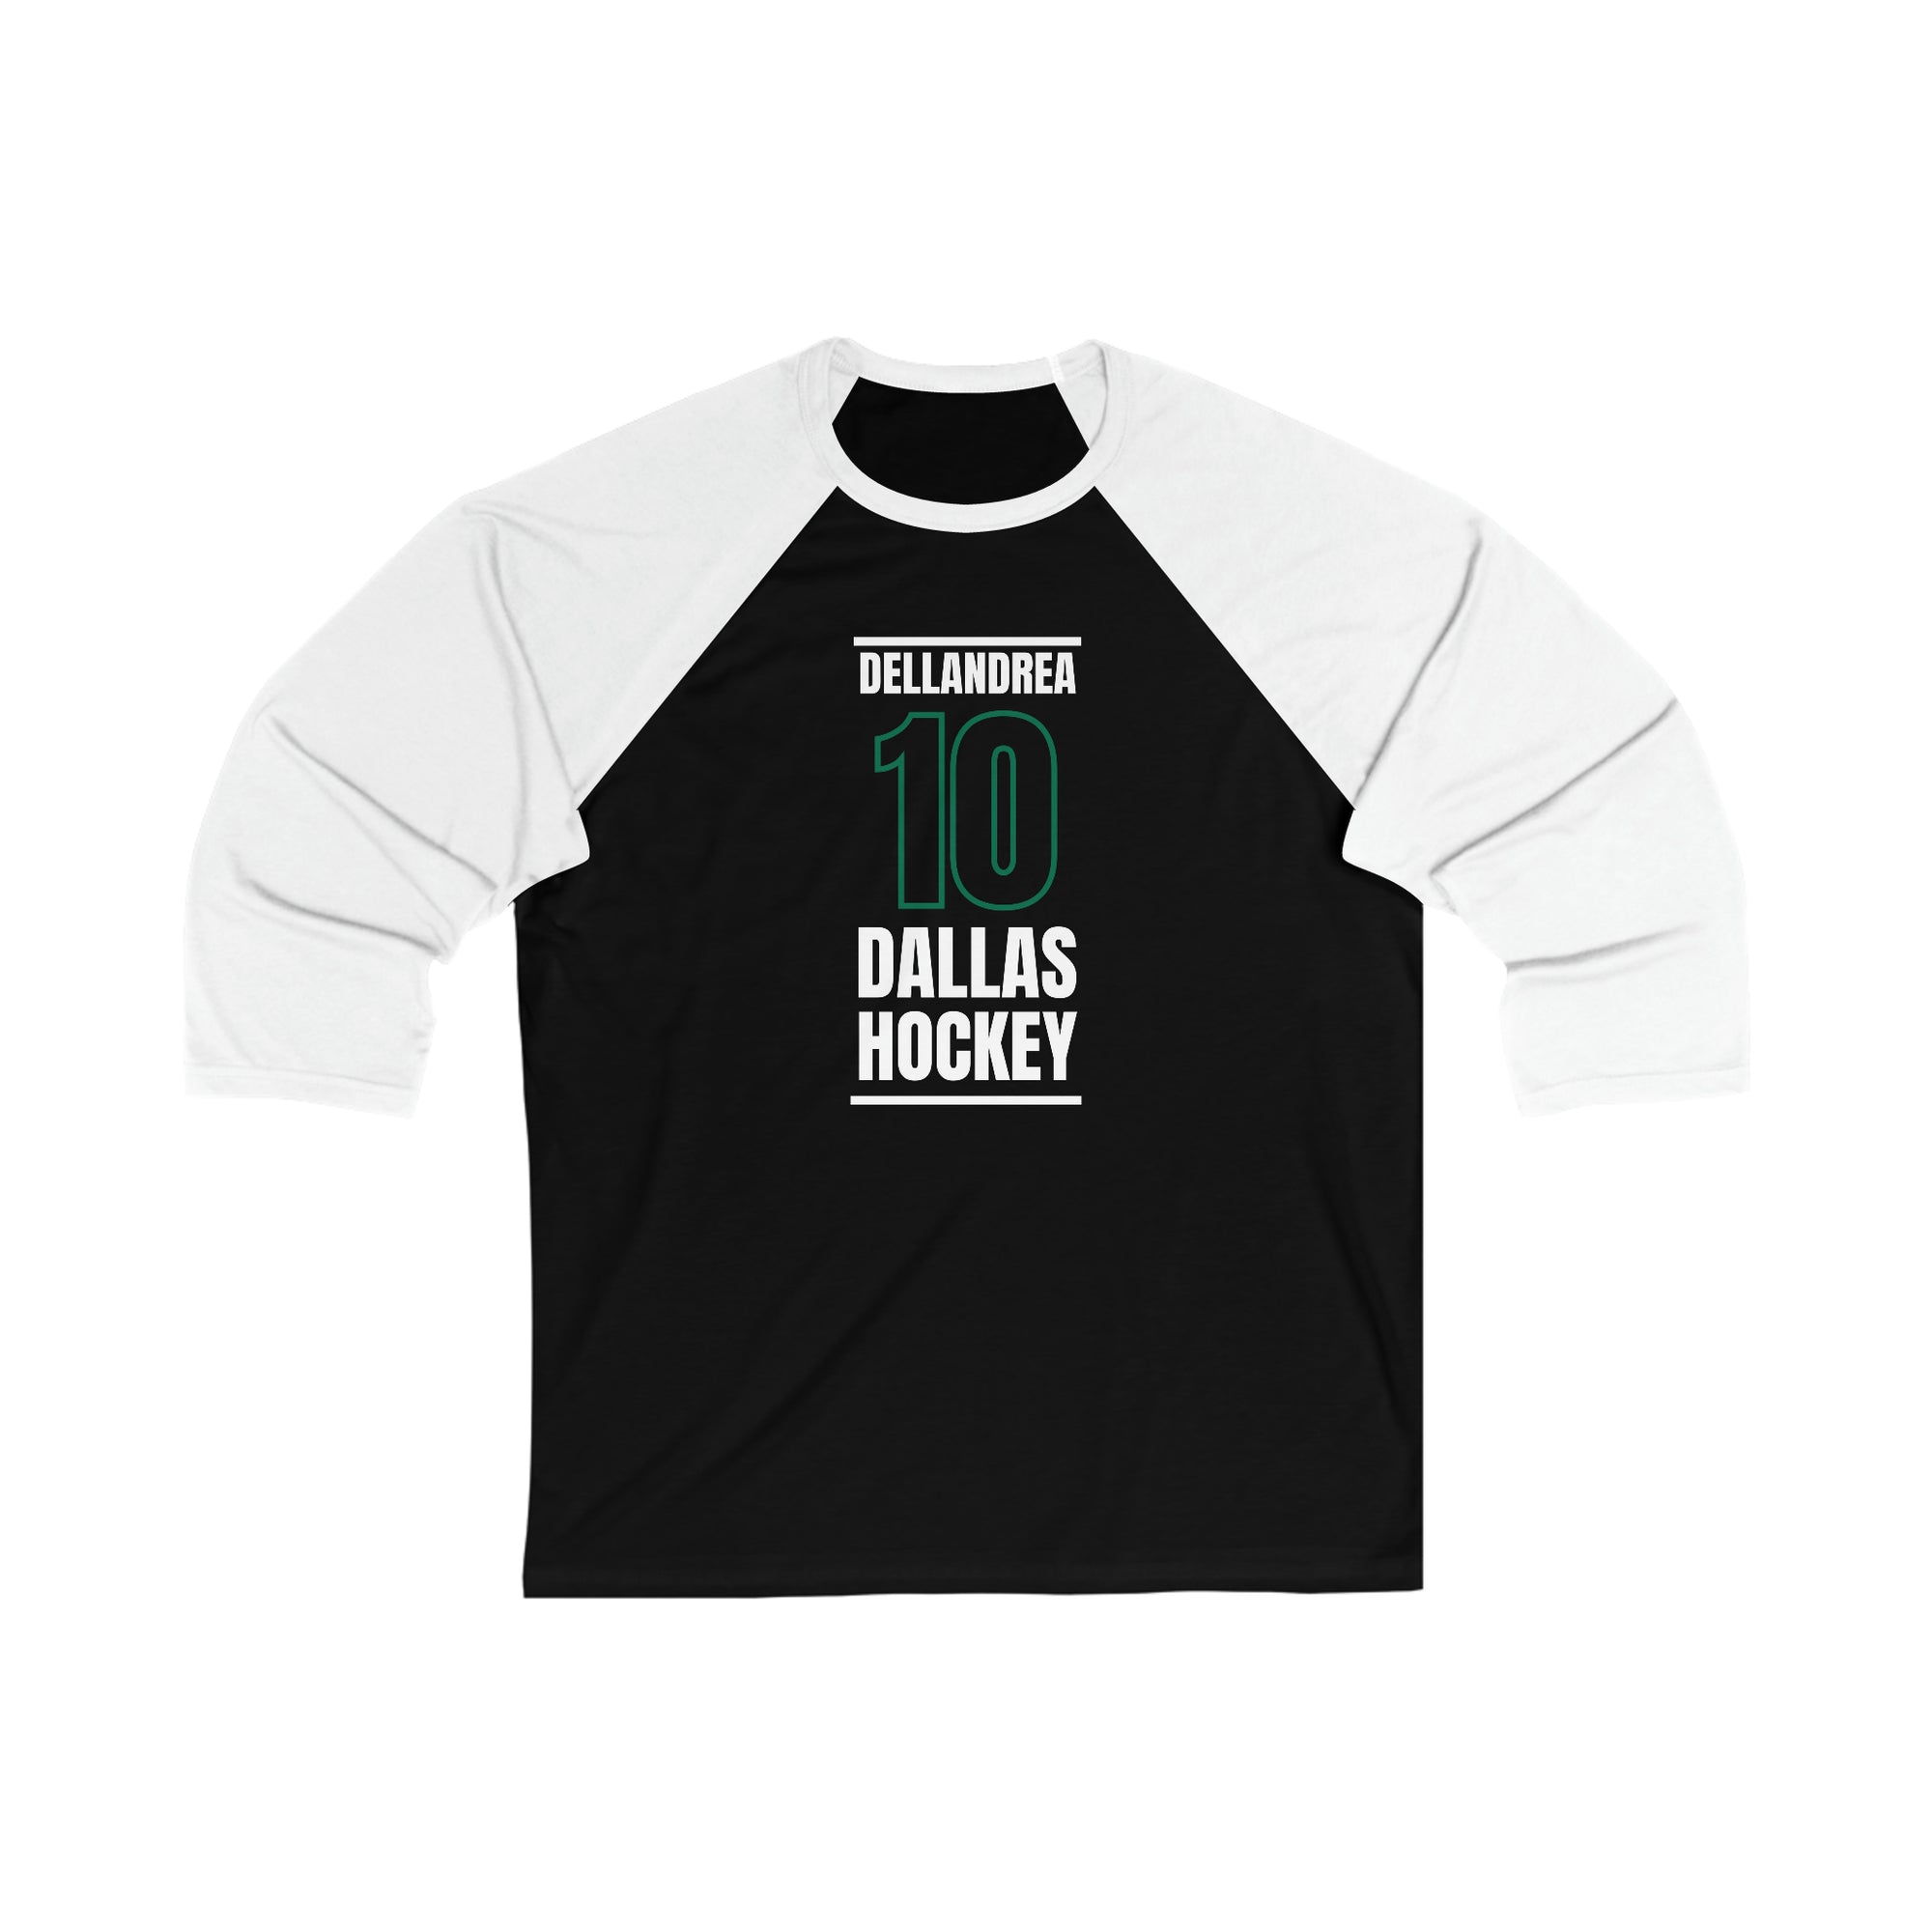 Dellandrea 10 Dallas Hockey Black Vertical Design Unisex Tri-Blend 3/4 Sleeve Raglan Baseball Shirt